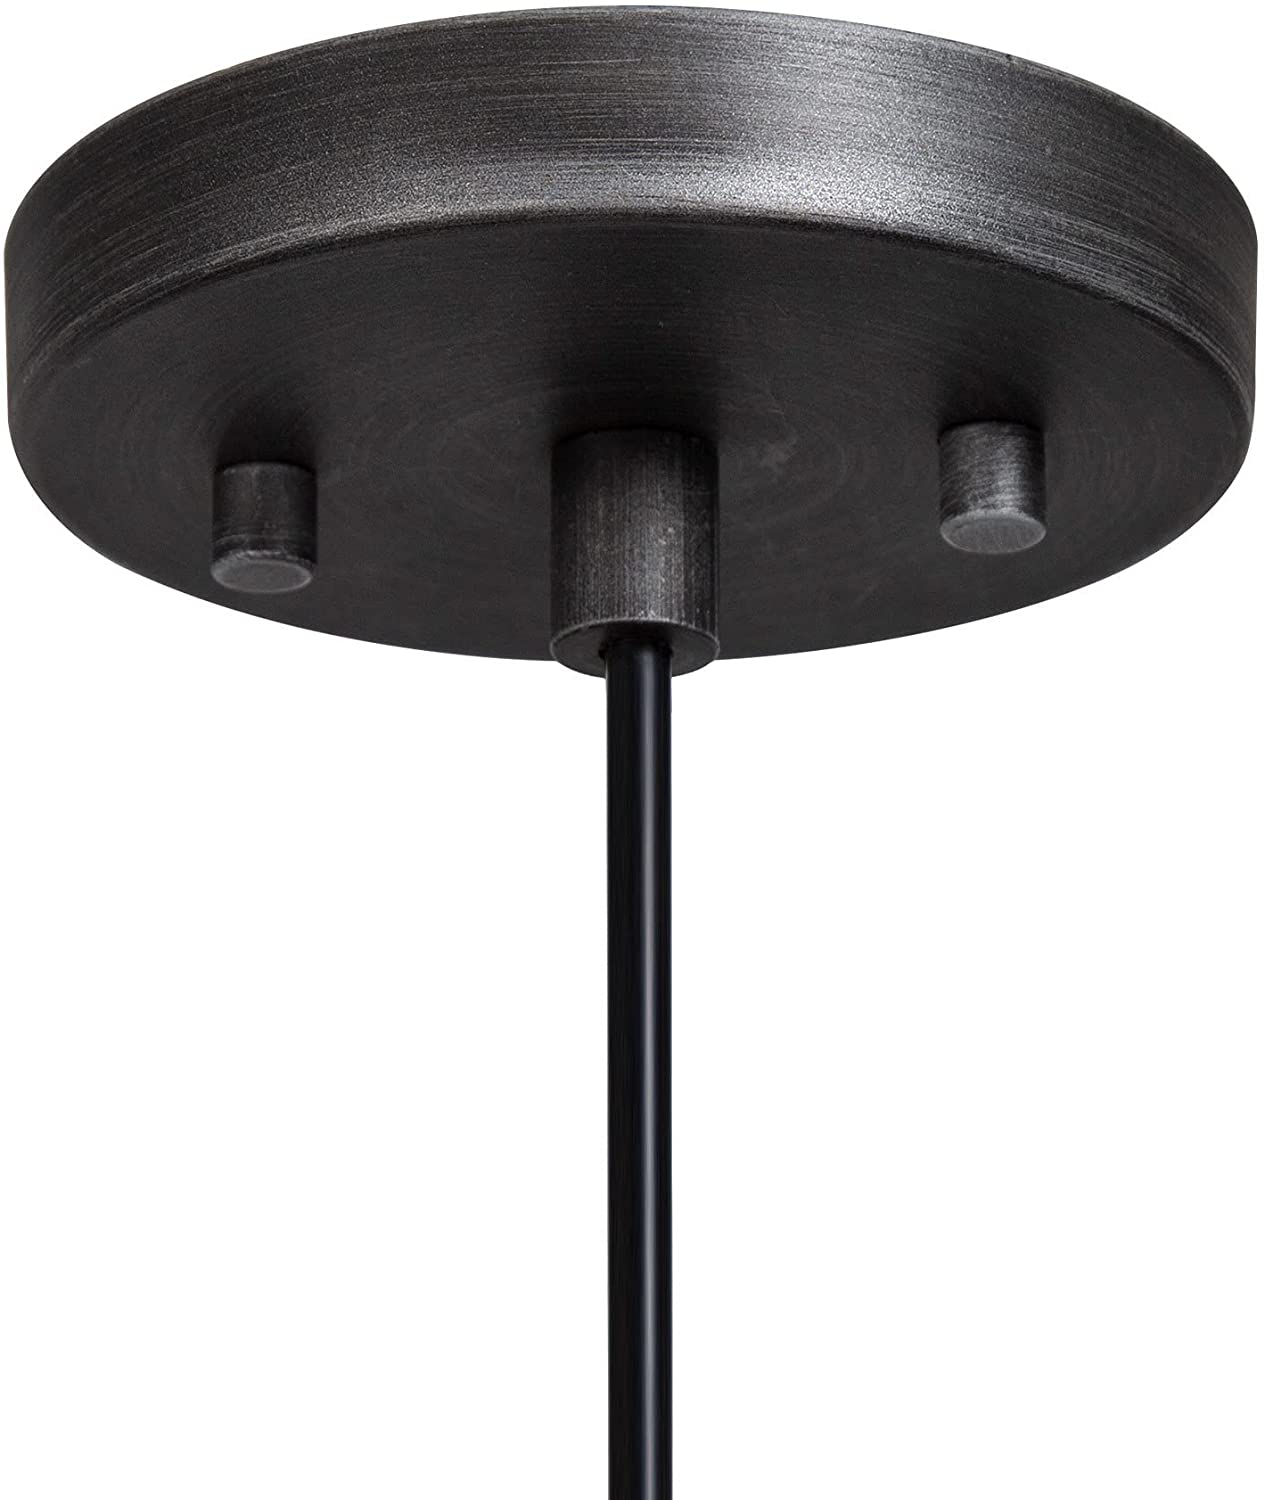 Black industrial pendant light cage island kitchen pendant light